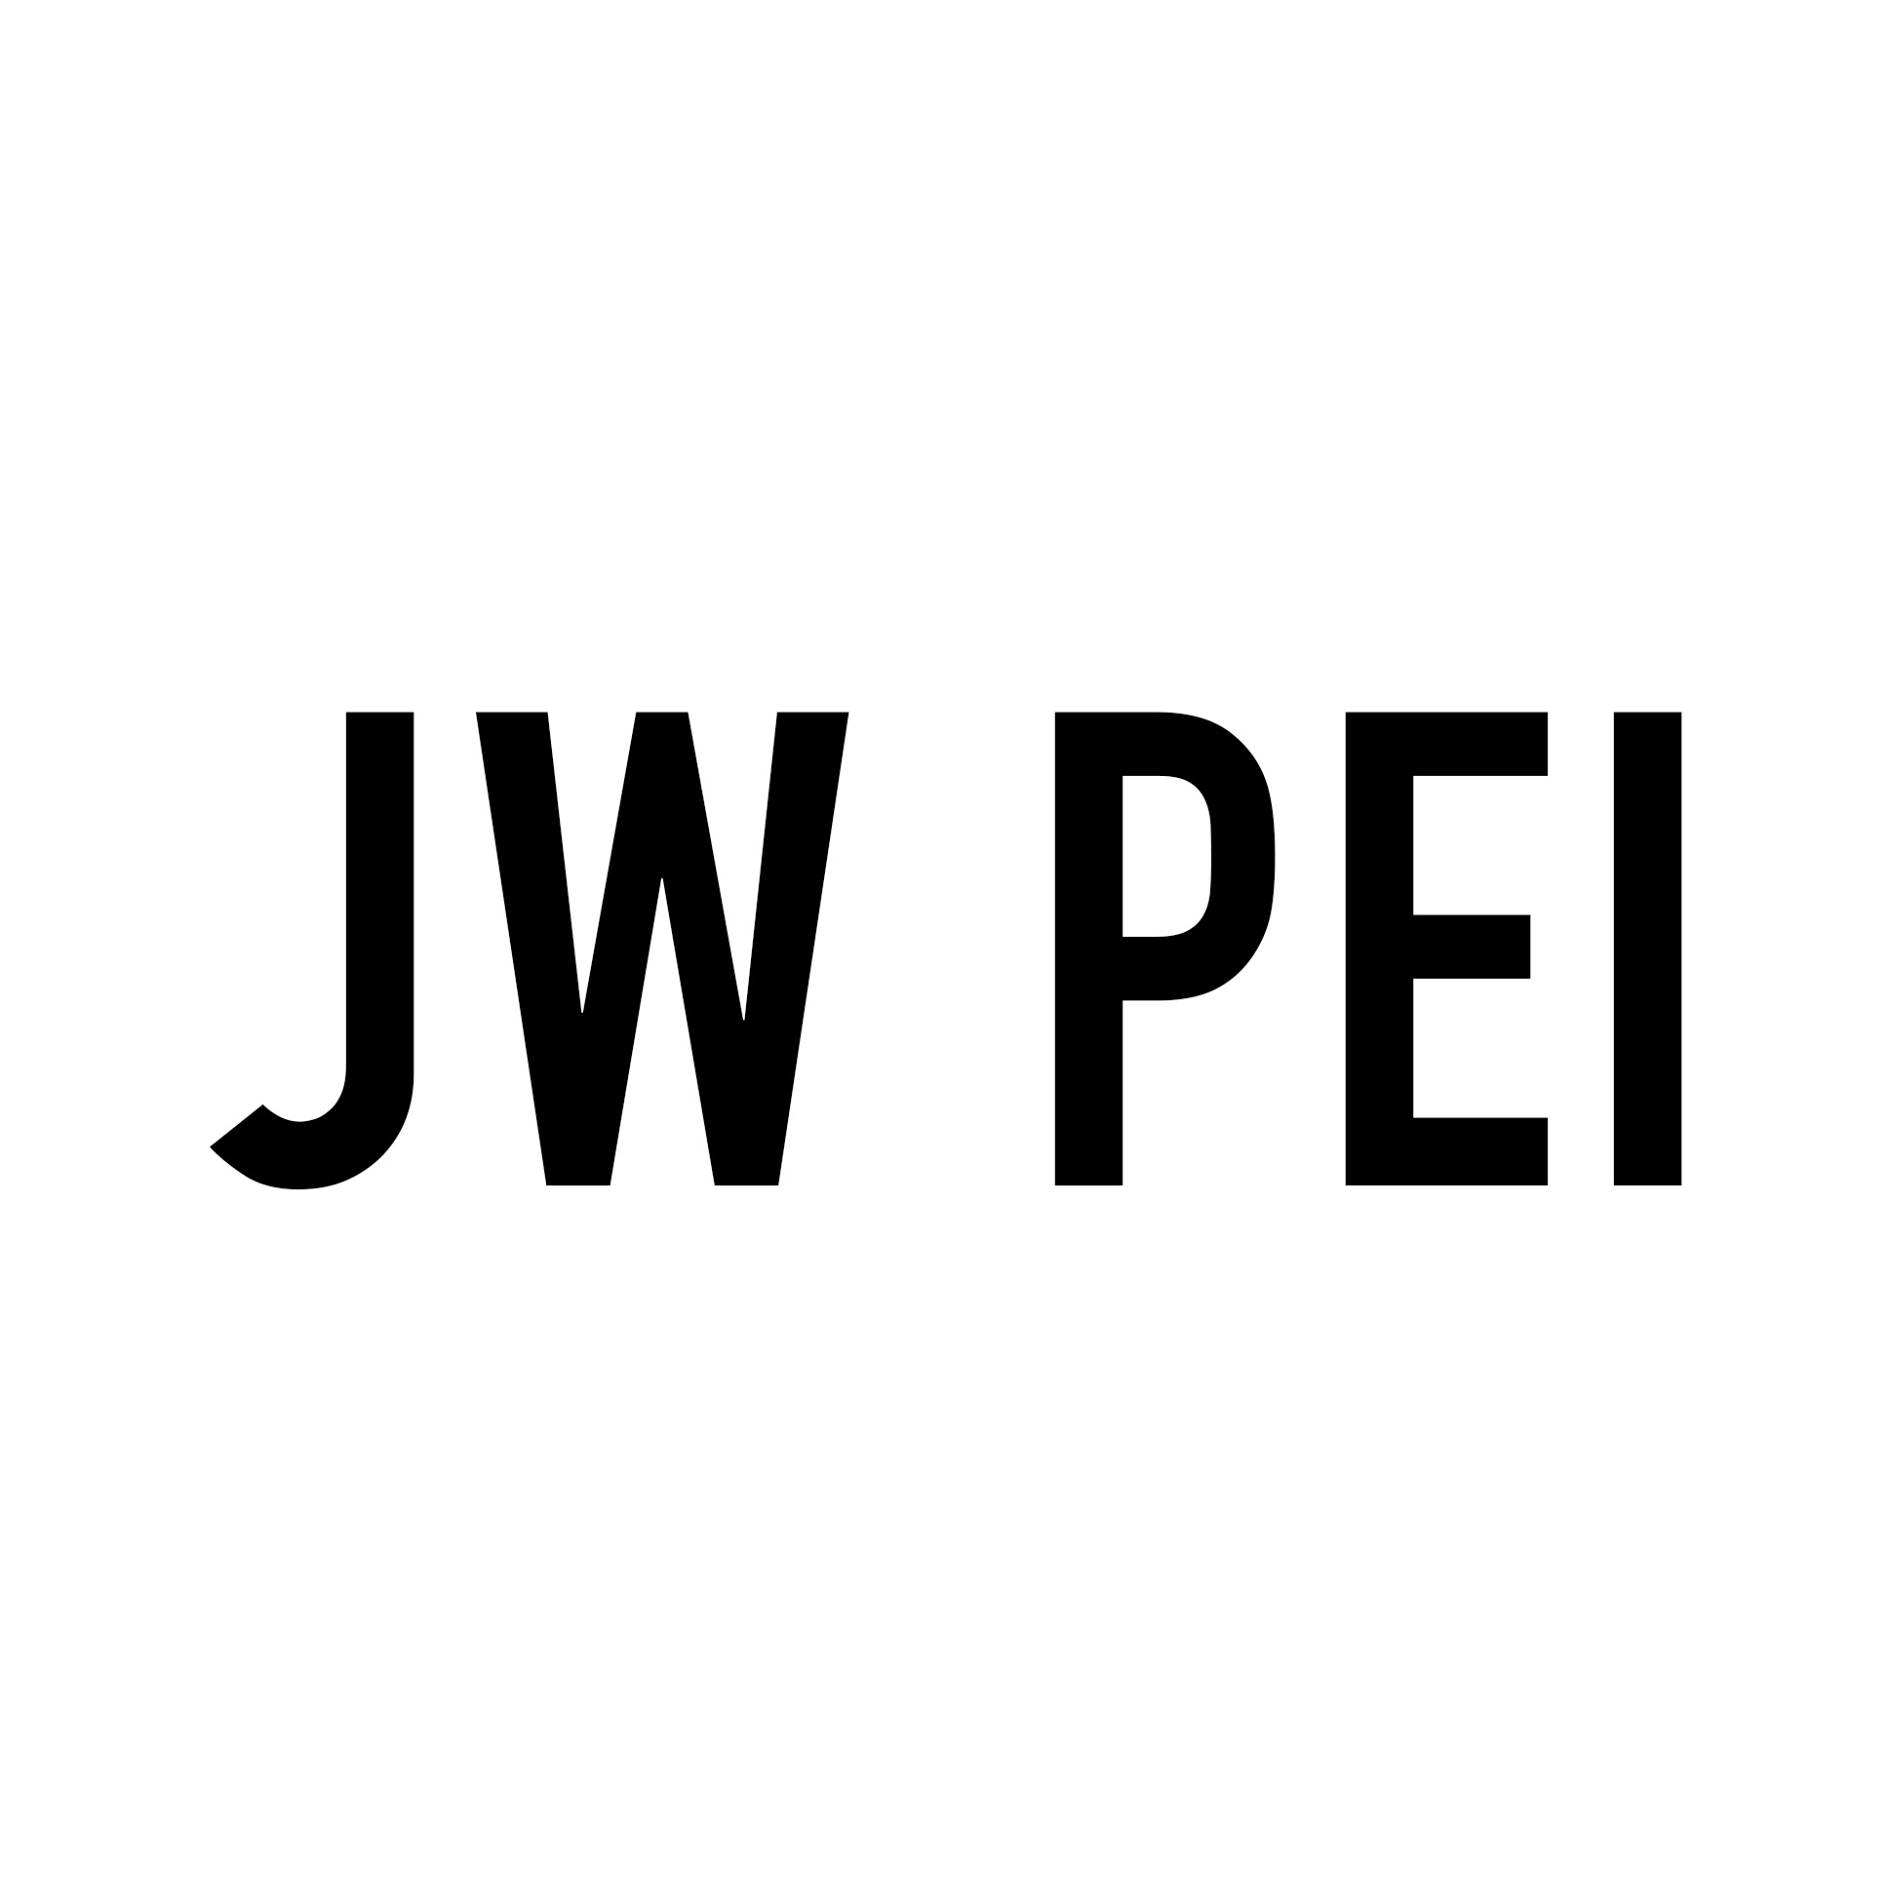 Company logo of Jwpei